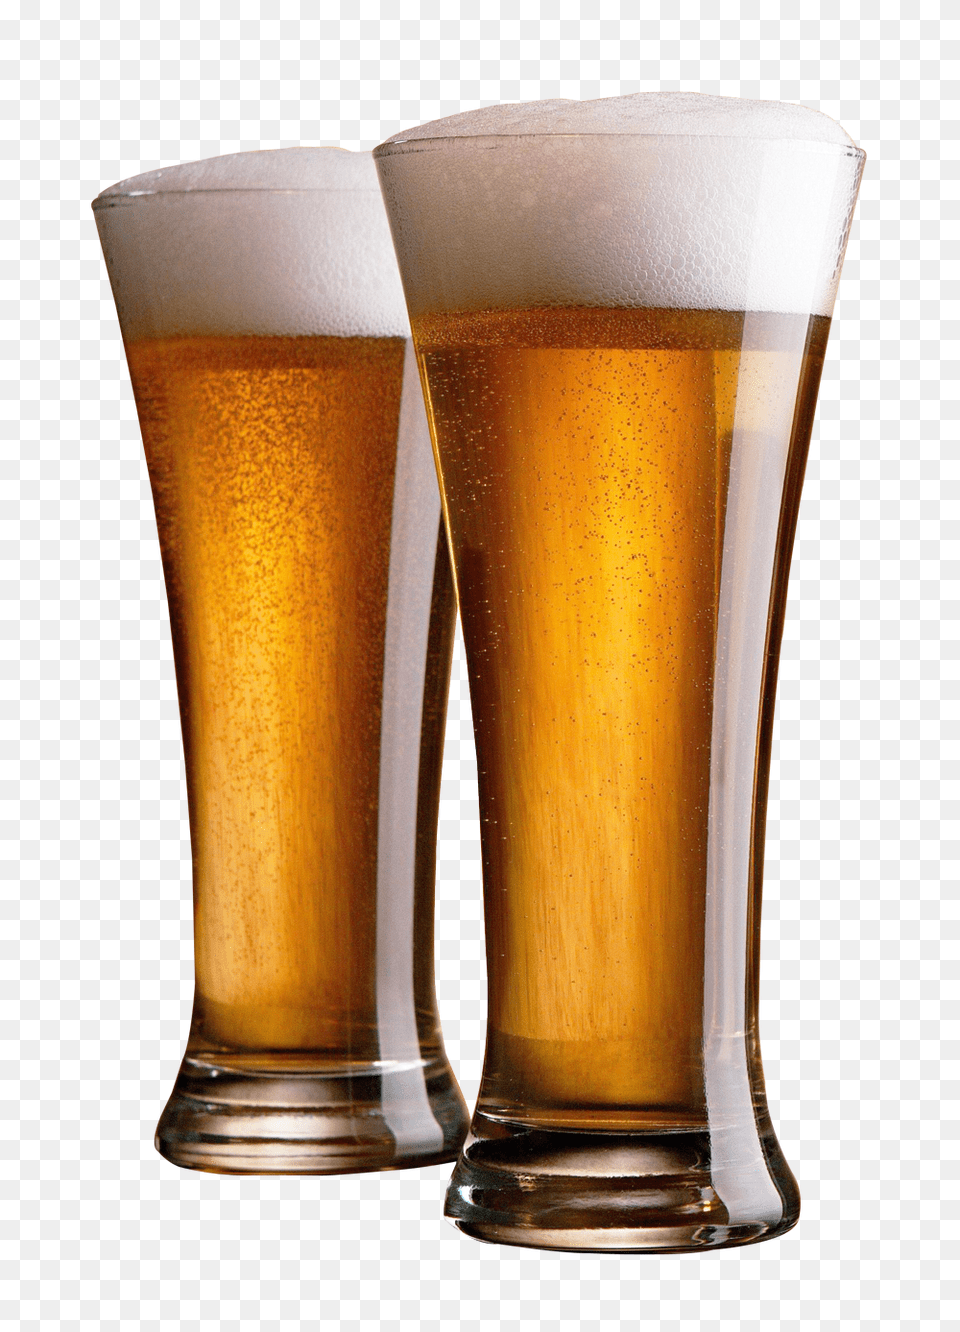 Pngpix Com Beer Glass Transparent, Alcohol, Beer Glass, Beverage, Liquor Free Png